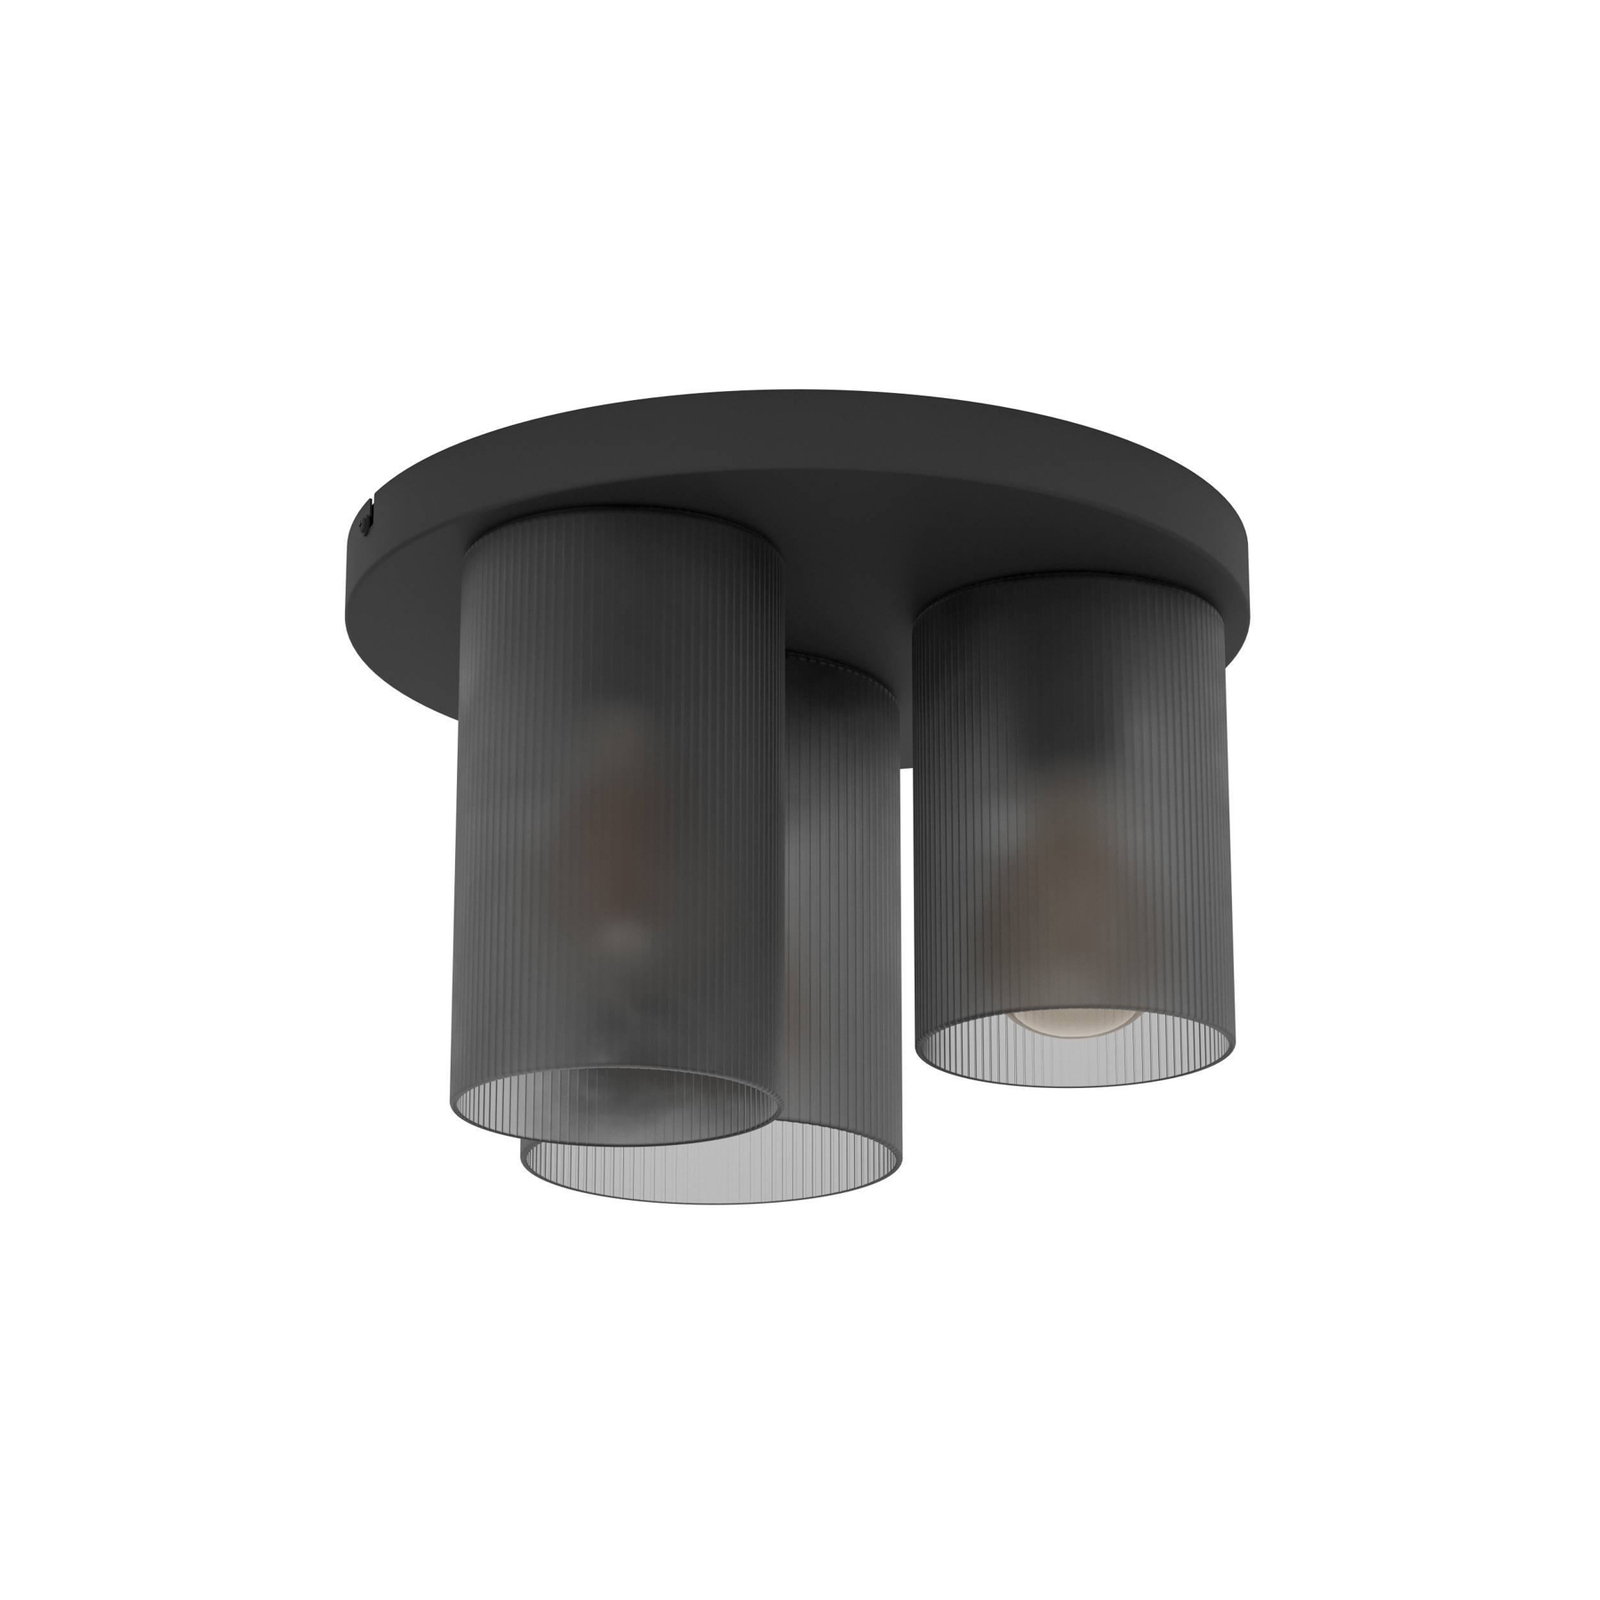 Deckenlampe Colomera, Ø 35 cm, schwarz/grau, 3-flg., Glas